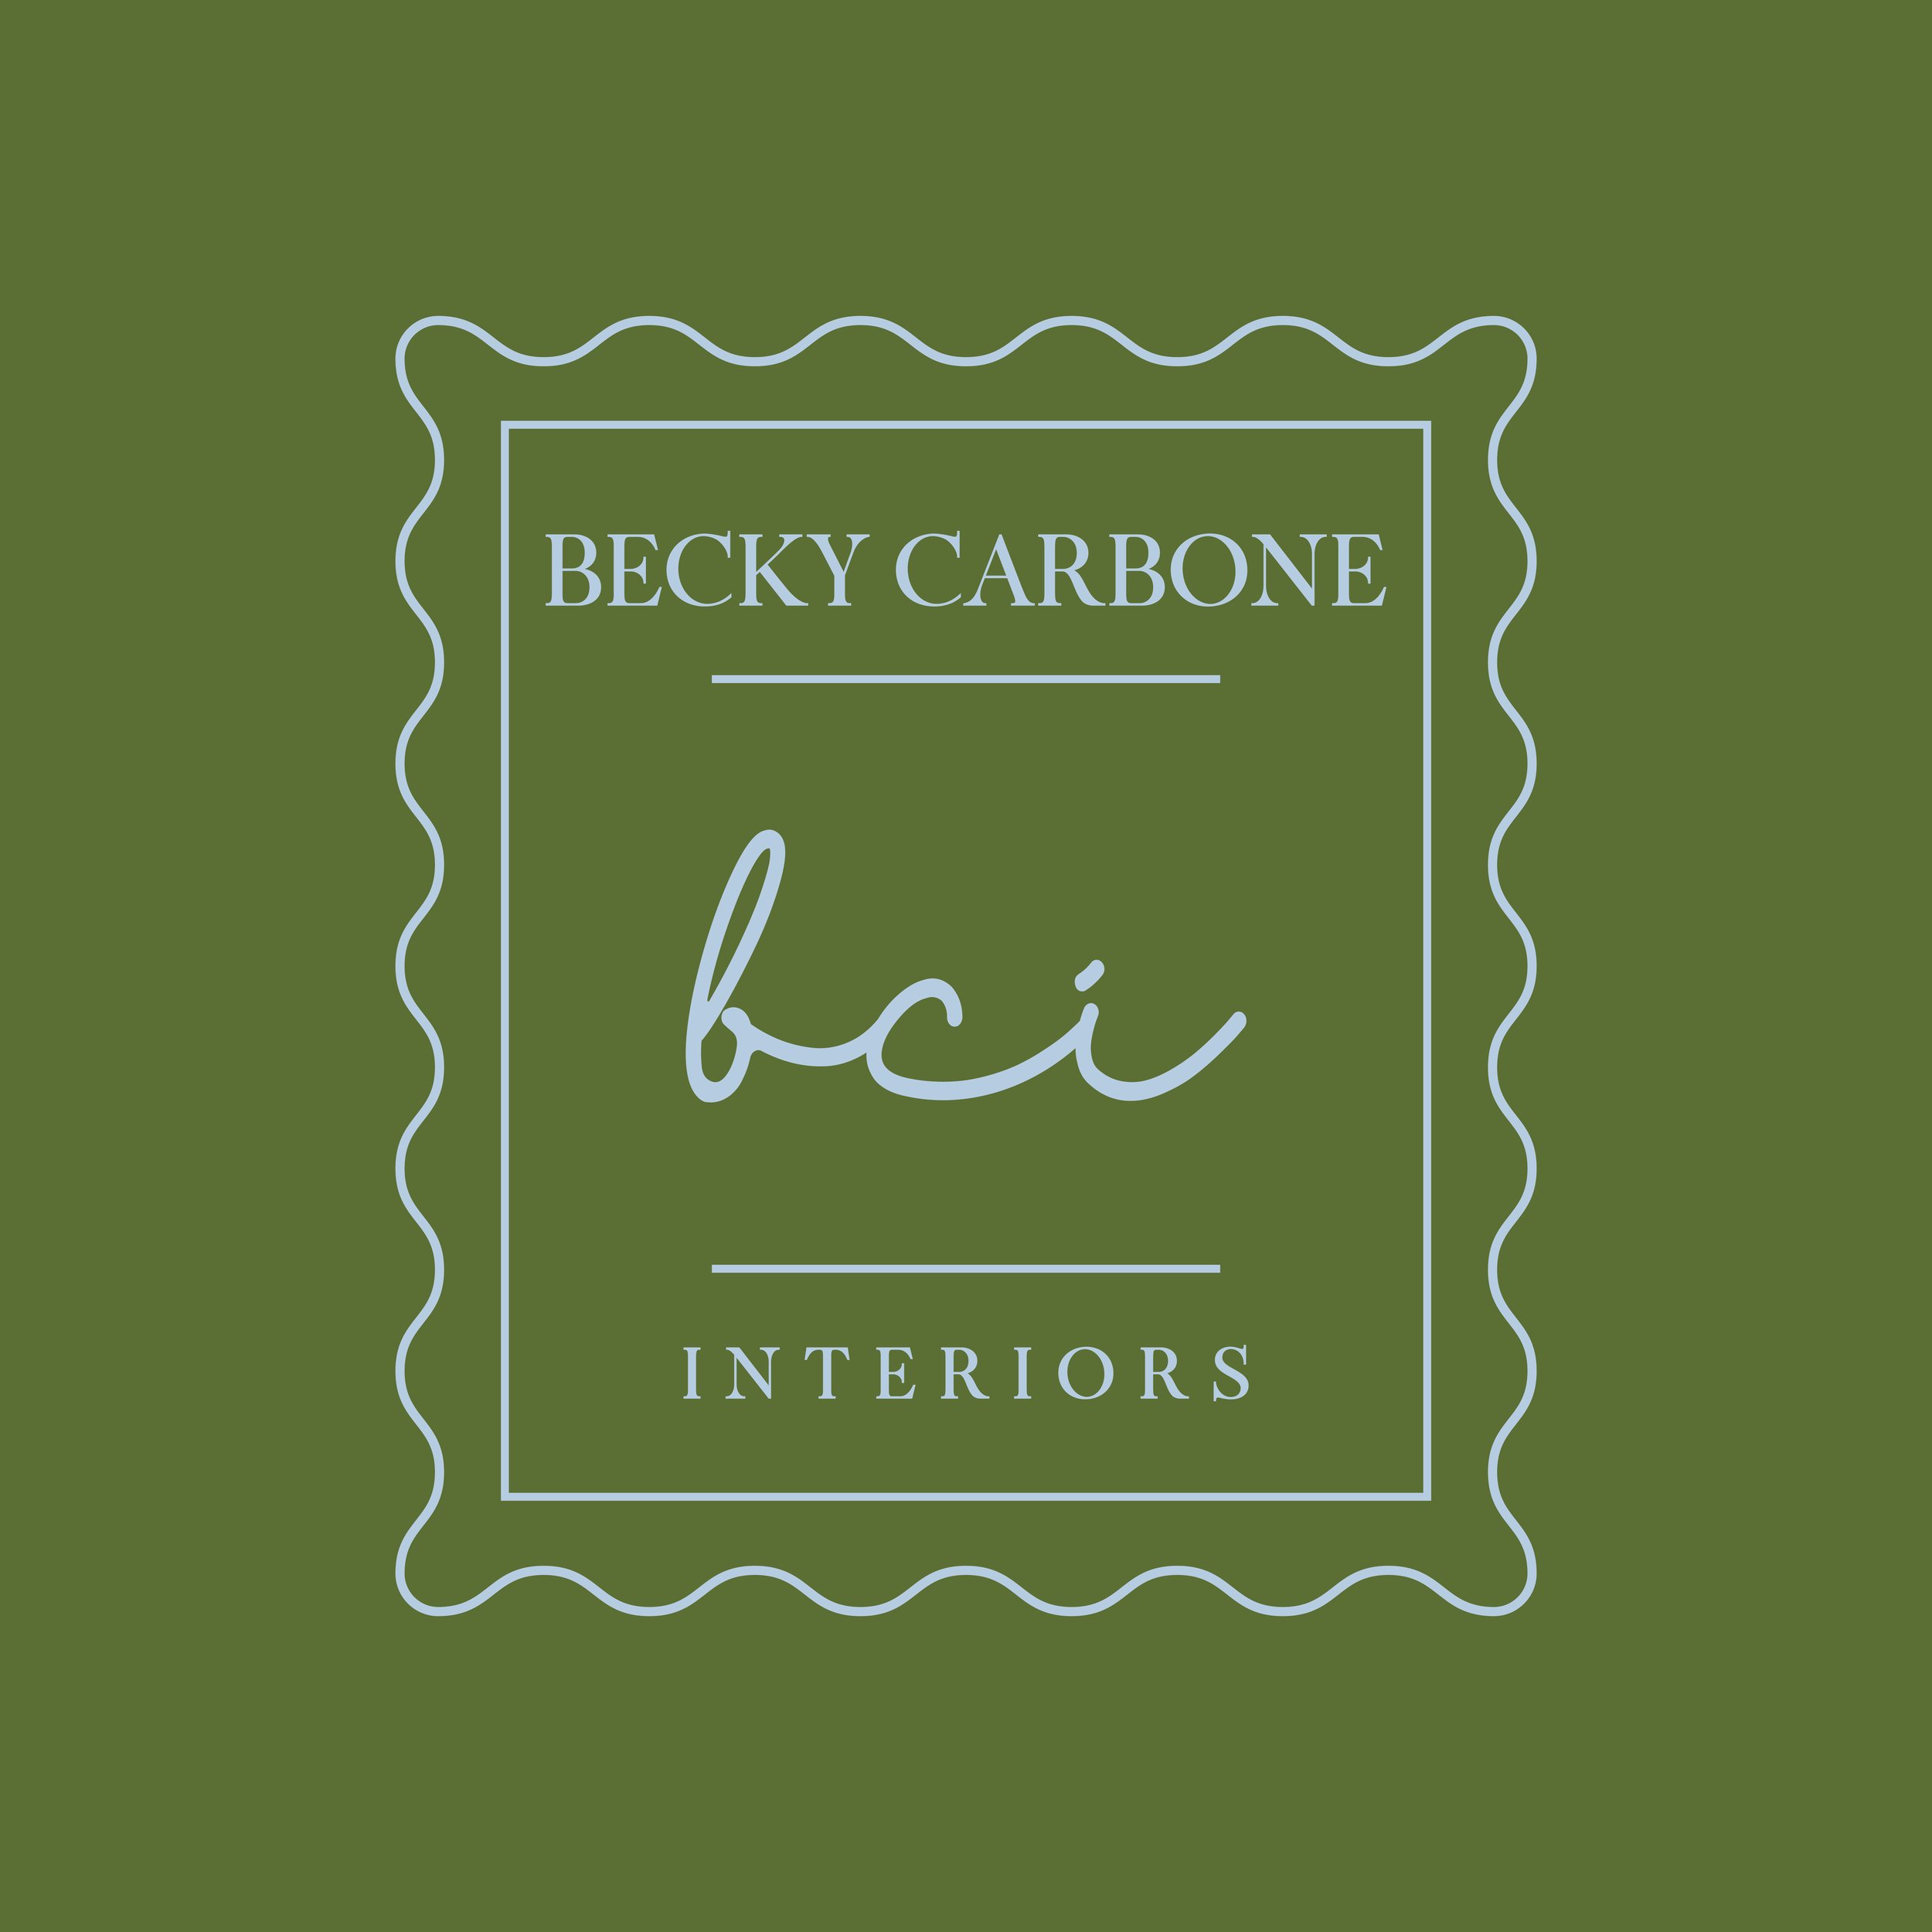 Becky Carbone Interiors